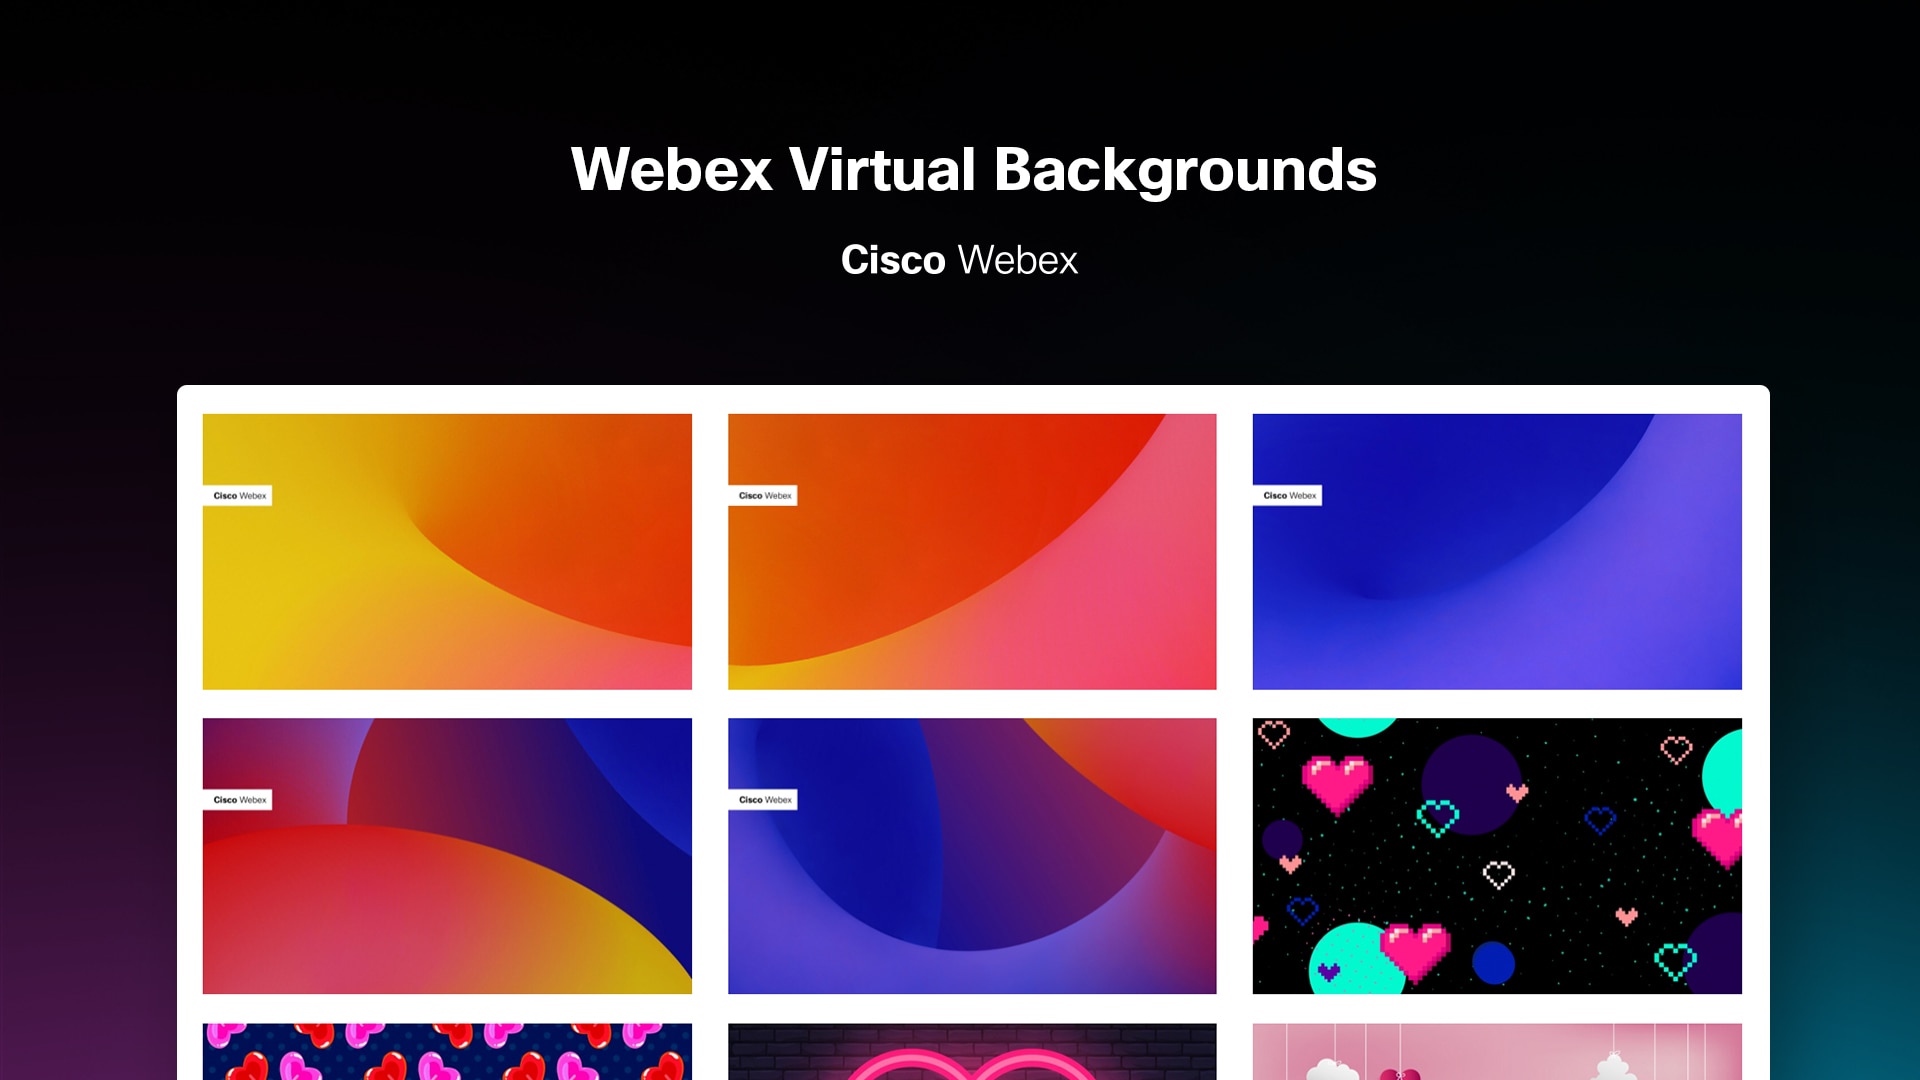 webex background images free